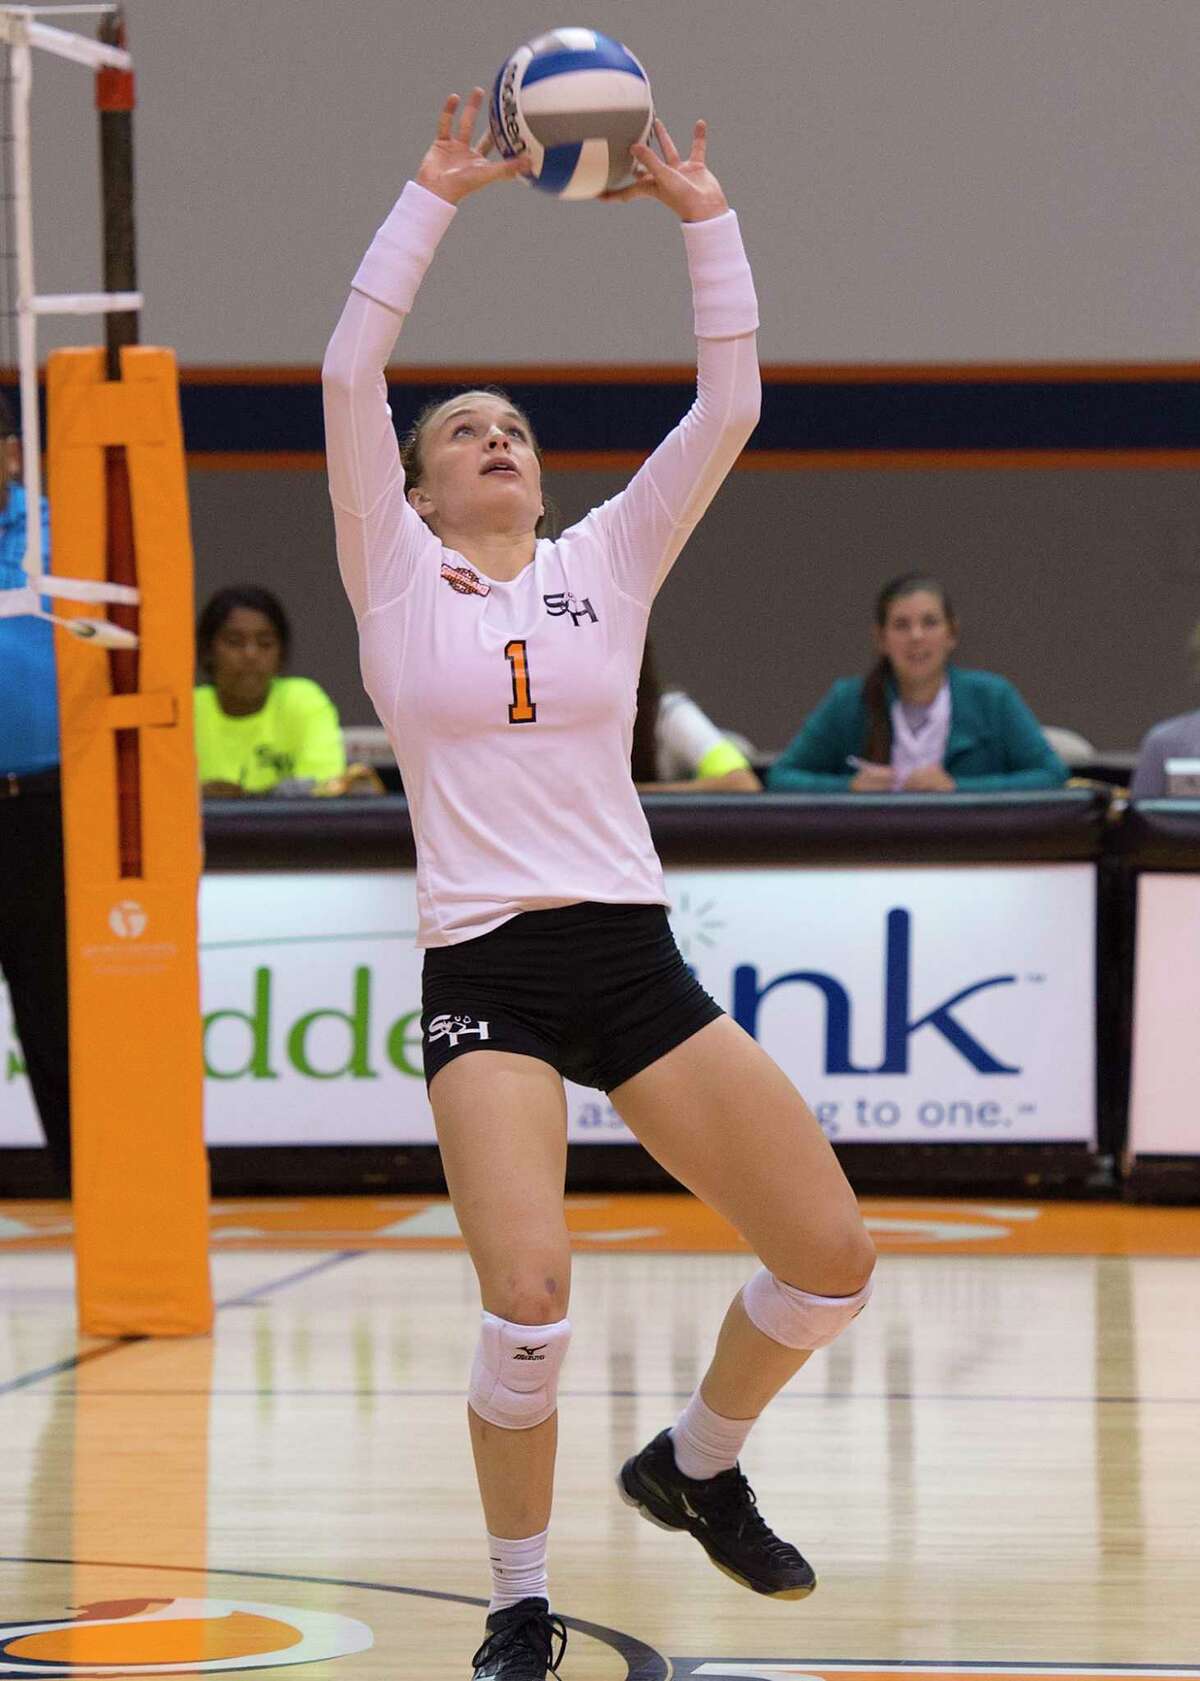 Sam Houston State volleyball player Jaclyn Ward. Ward is a 2015 graduate of Oak Ridge High School.